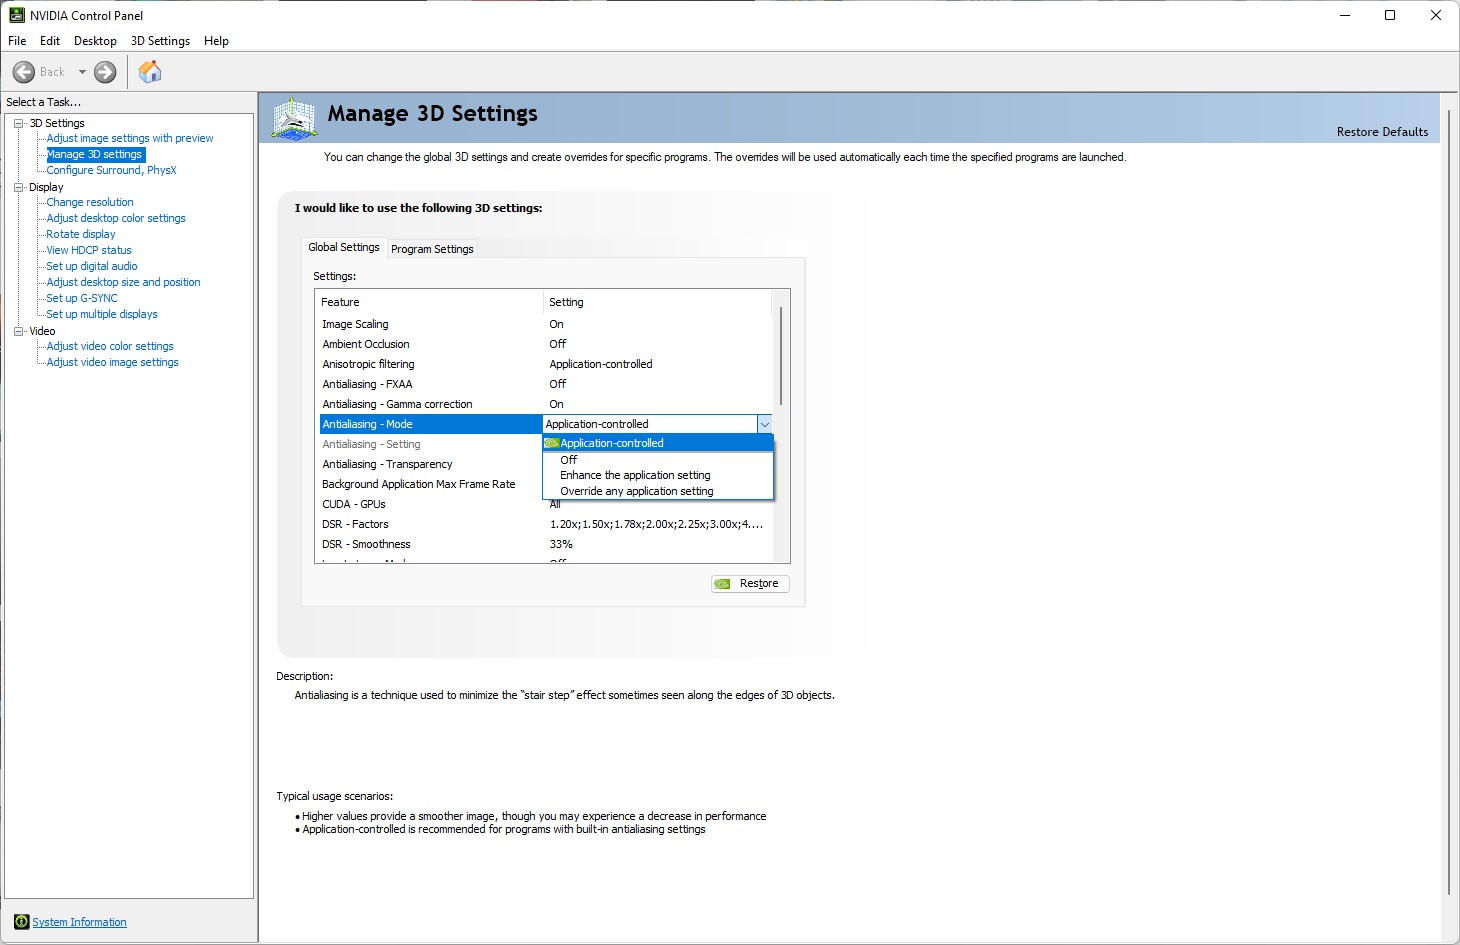 Anti-aliasing settings in the Nvidia Control Panel